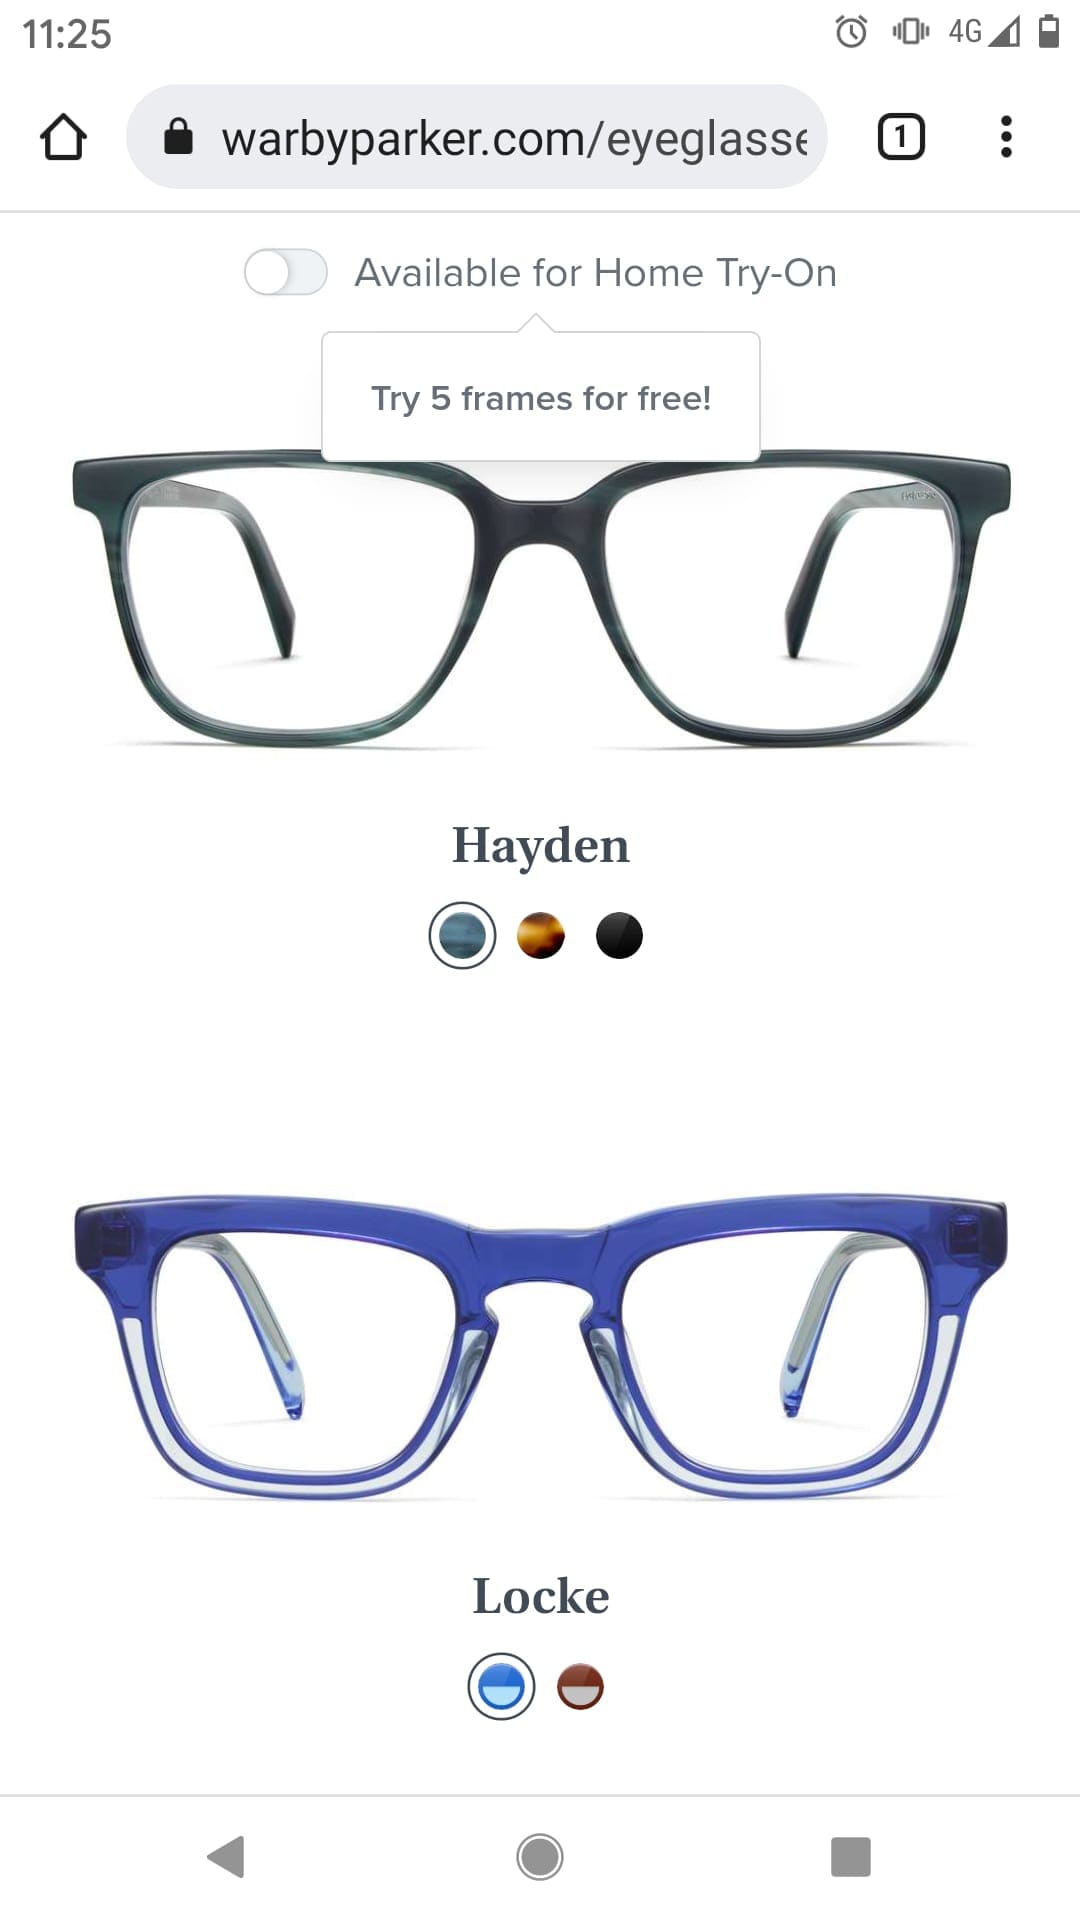 Browsing different eyeglasses frames on WarbyParker.com